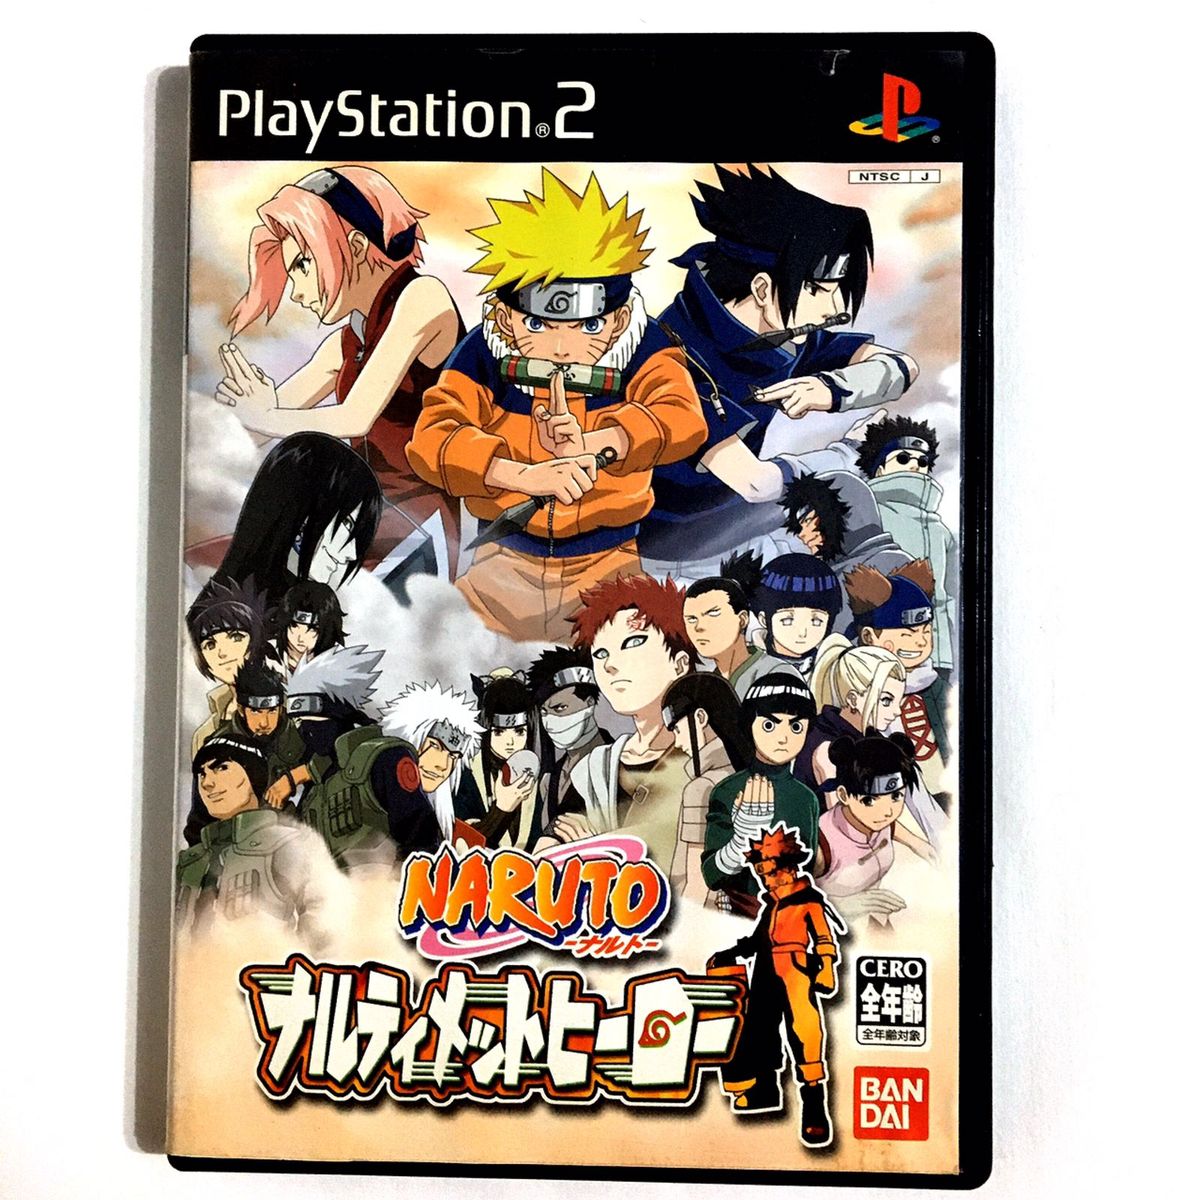 Naruto Ultimate Ninja 5 - Dublado - Repro Ps2 / Retro Patch Play 2 DVd Iso